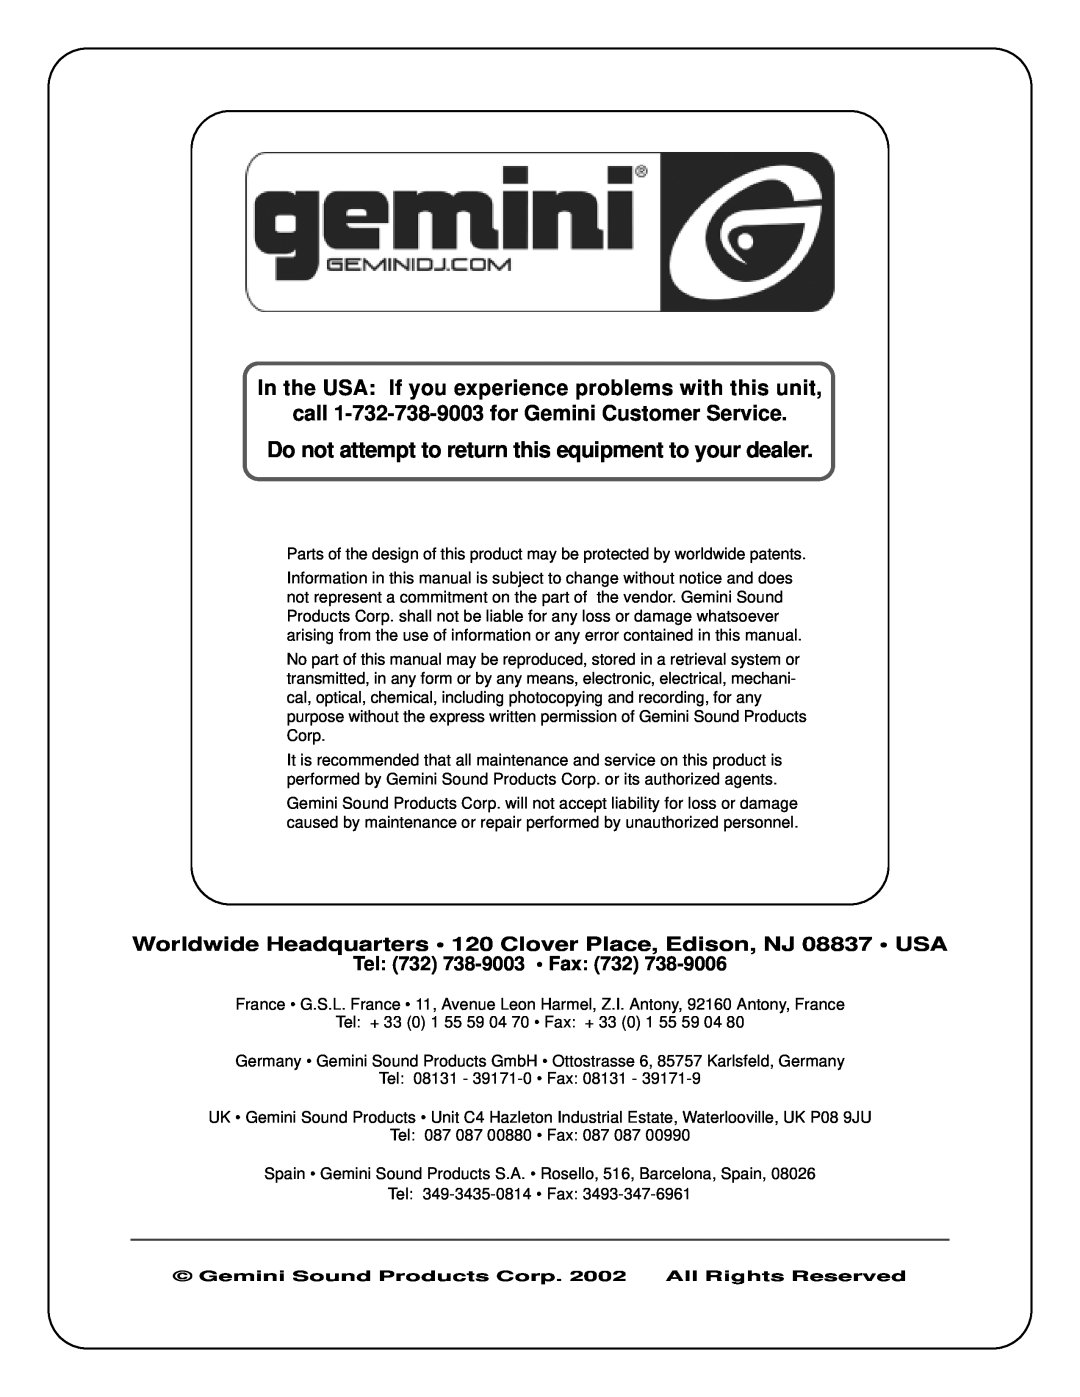 Gemini PDT-6000 manual call 1-732-738-9003for Gemini Customer Service, Tel 732 738-9003 Fax 